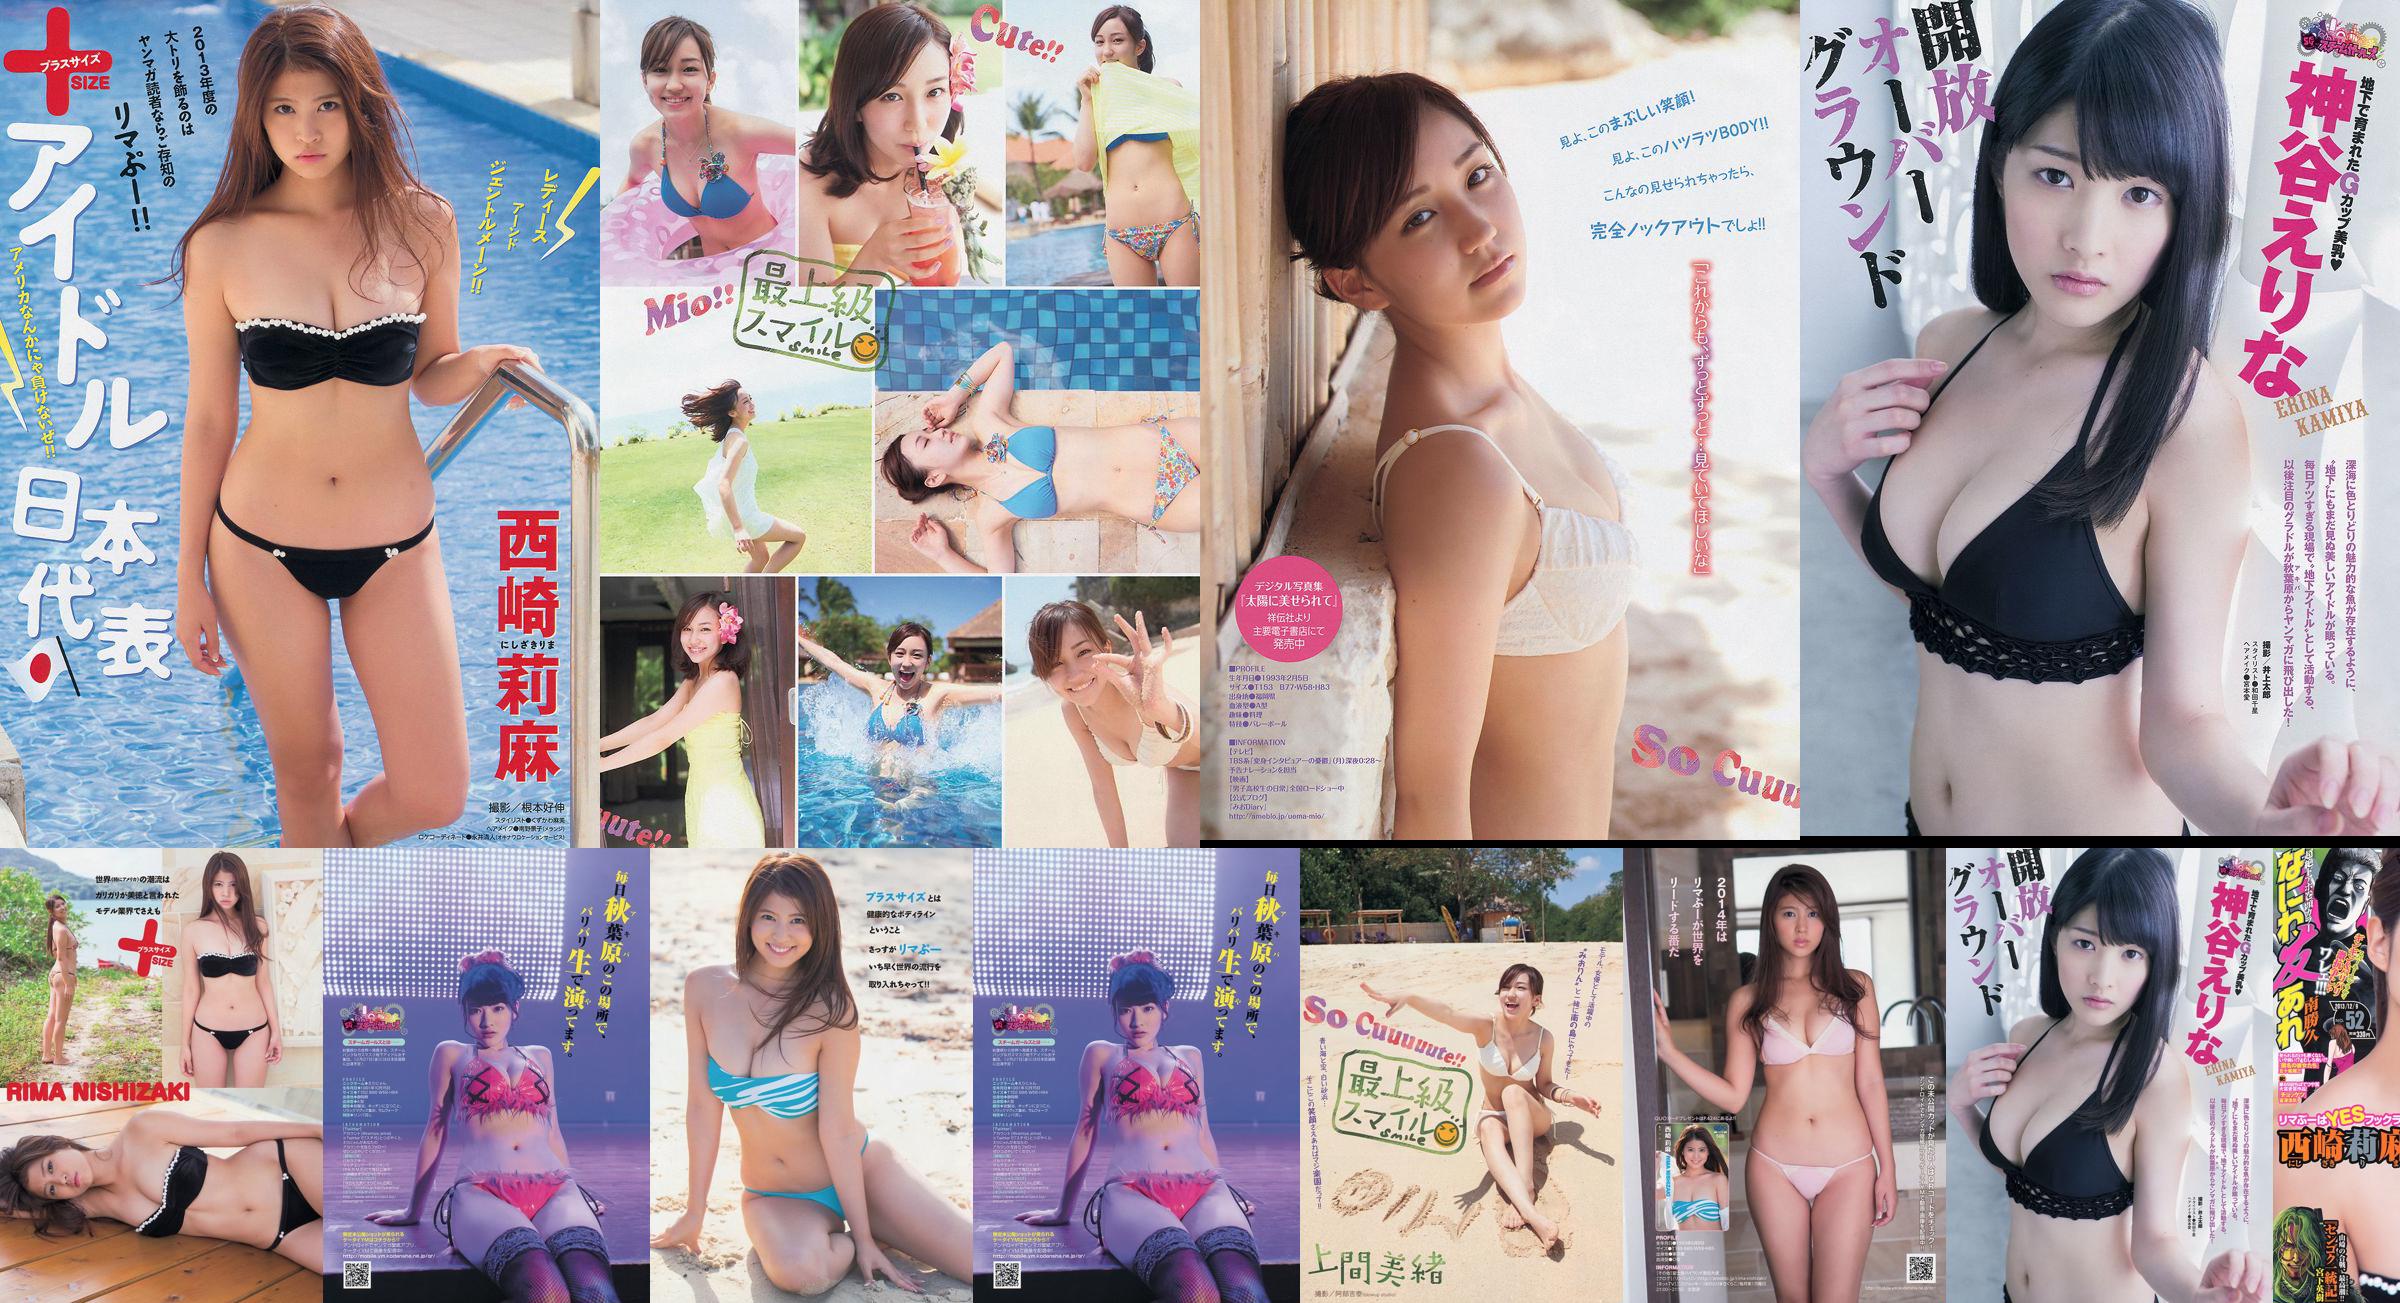 [Majalah Muda] Rima Nishizaki Mio Uema Erina Kamiya 2013 No.52 Foto Moshi No.121d12 Halaman 3